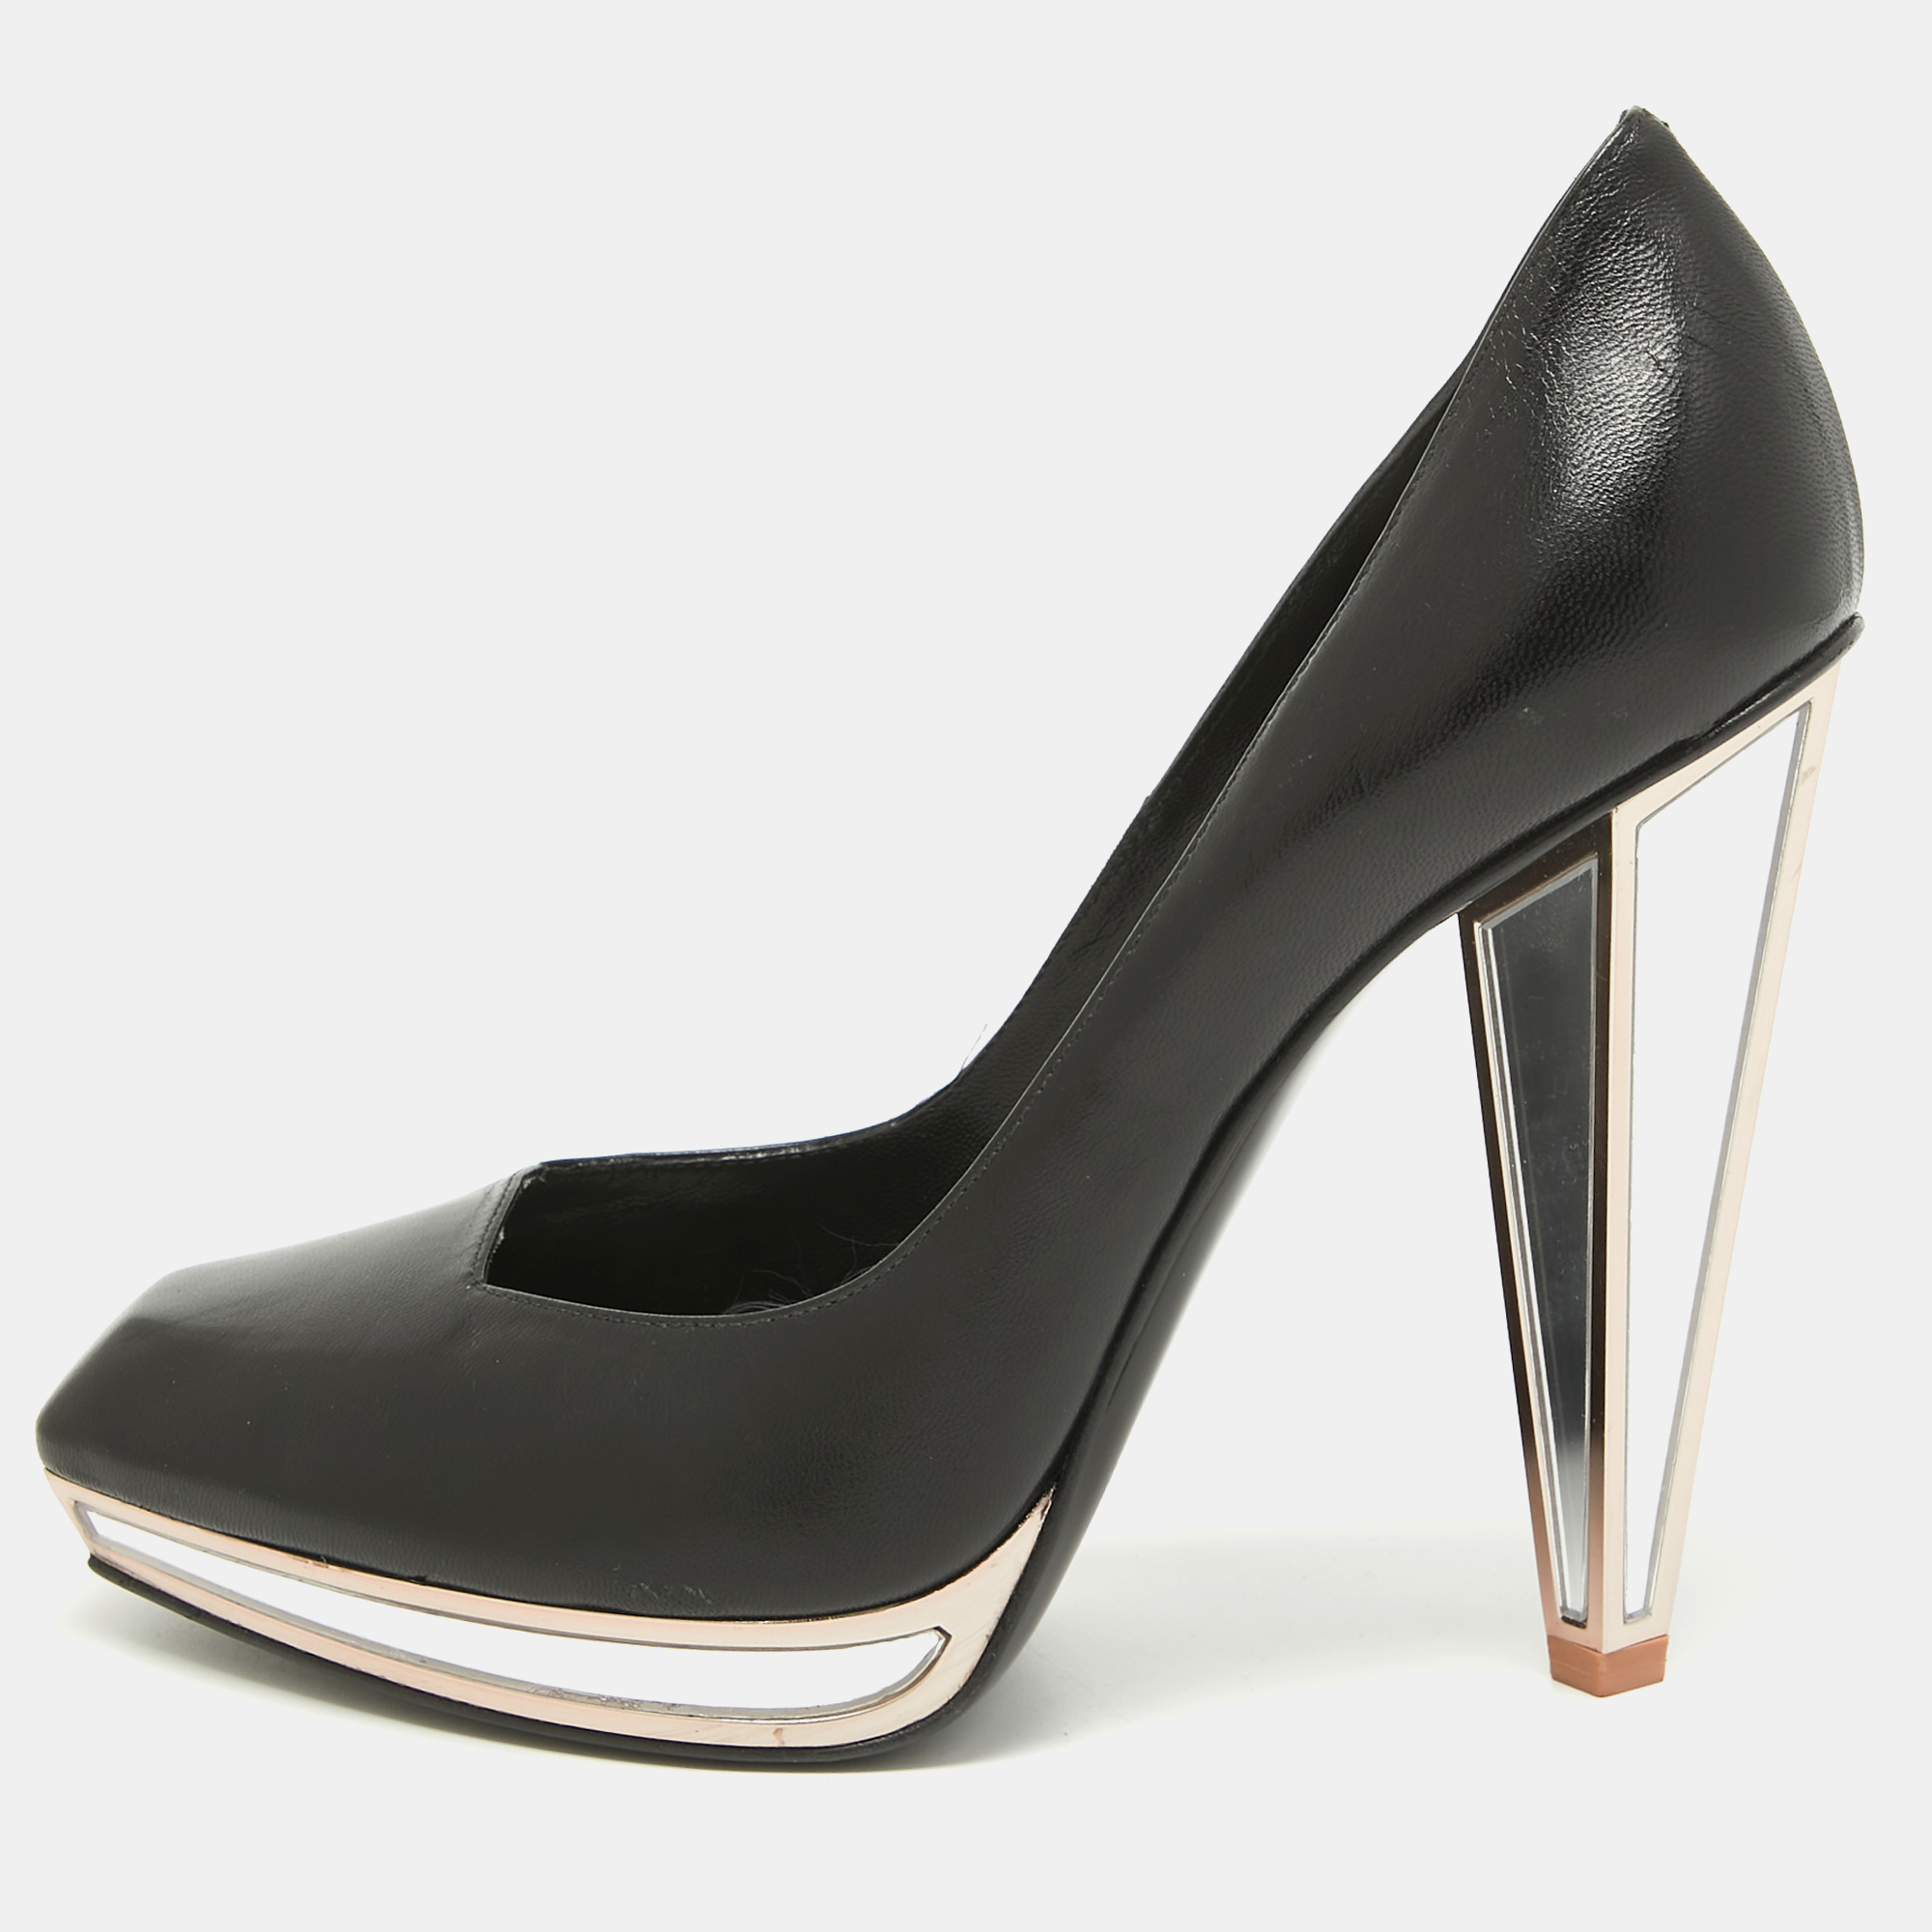 Yves saint laurent black leather mirror heel platform pumps size 38.5